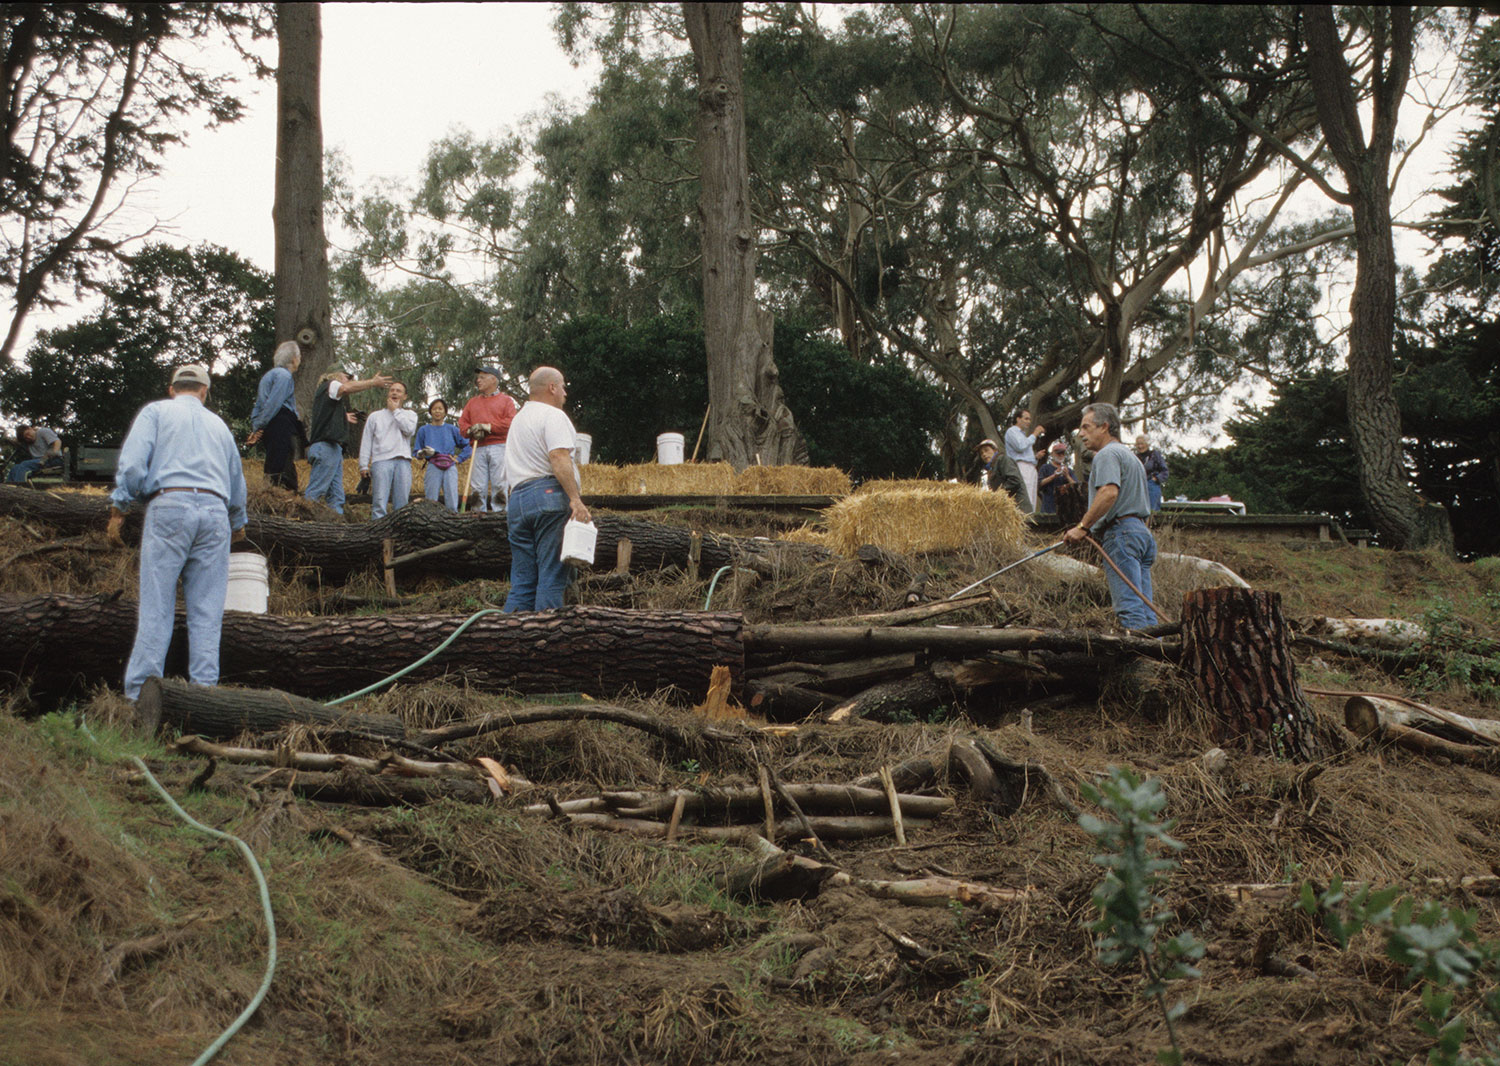 Community lead erosion control at Edgehill Park 1999